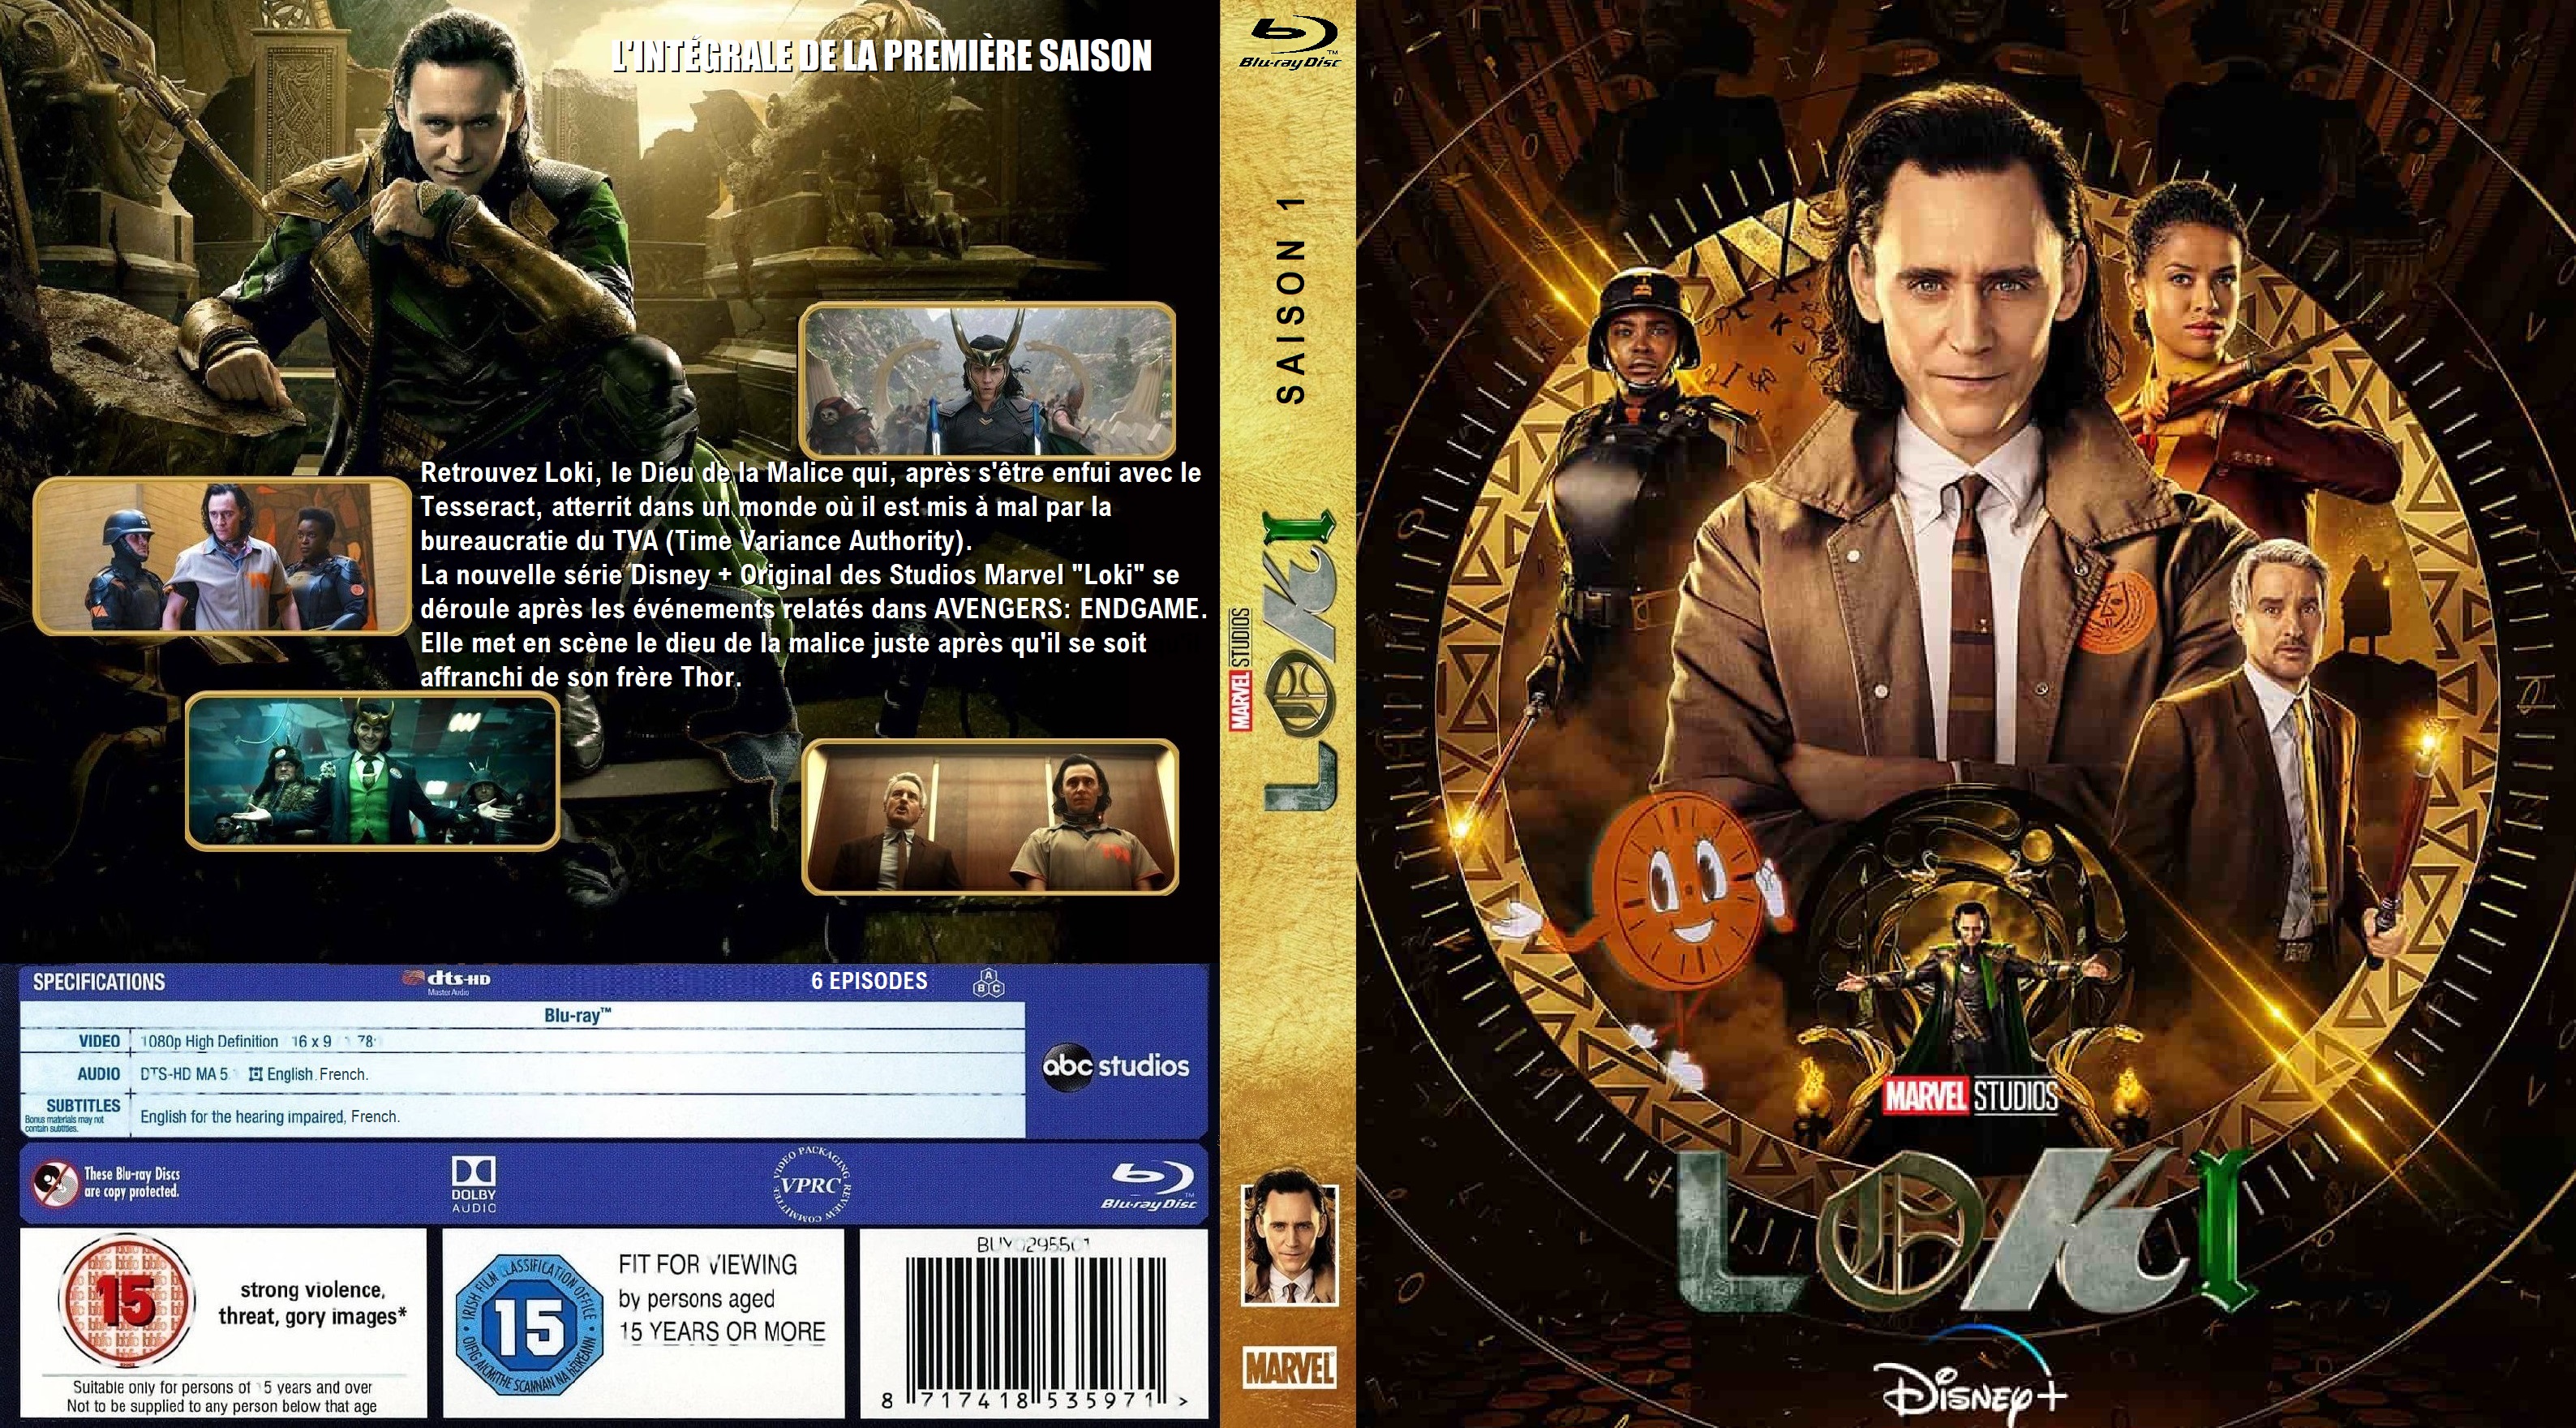 Jaquette DVD de Loki Saison 1 custom (BLU-RAY) - Cinéma Passion